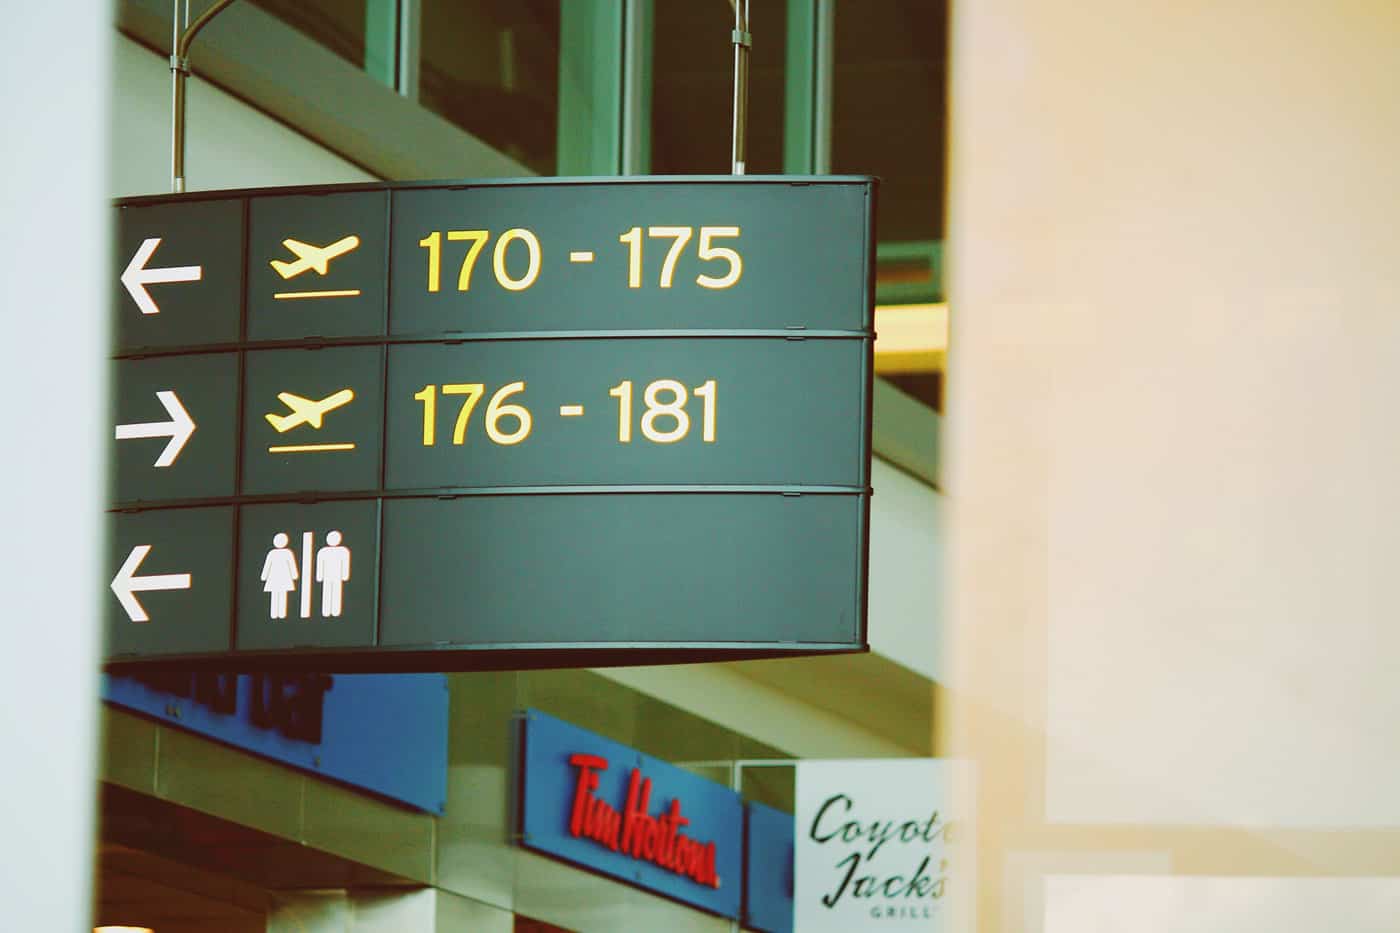 Airport signage photo by George Kourounis on Unsplash